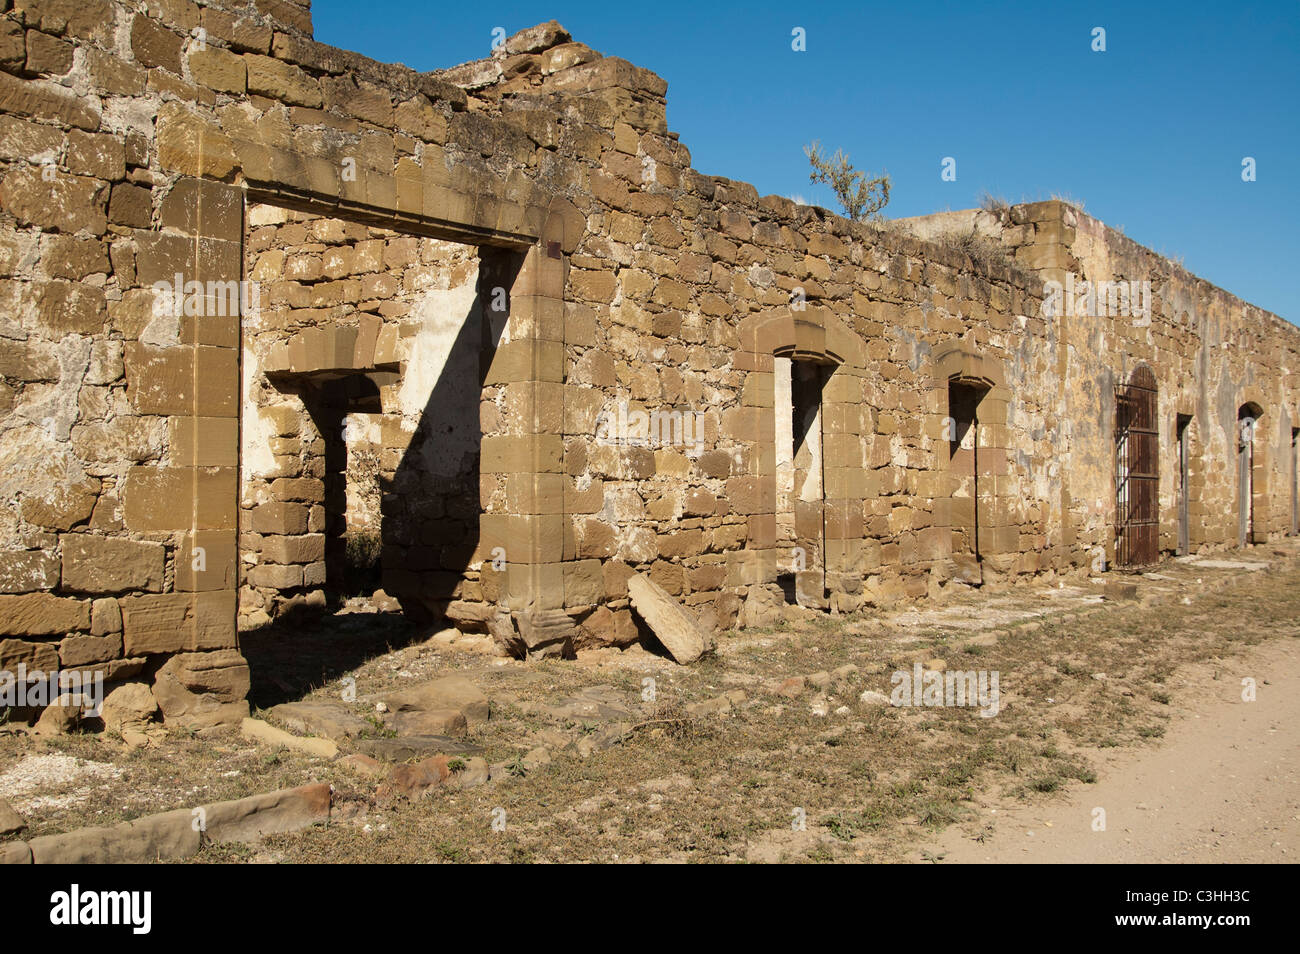 Ruinen der Sandstein-Architektur in Guerrero Viejo, Tamaulipas, Mexiko. Stockfoto